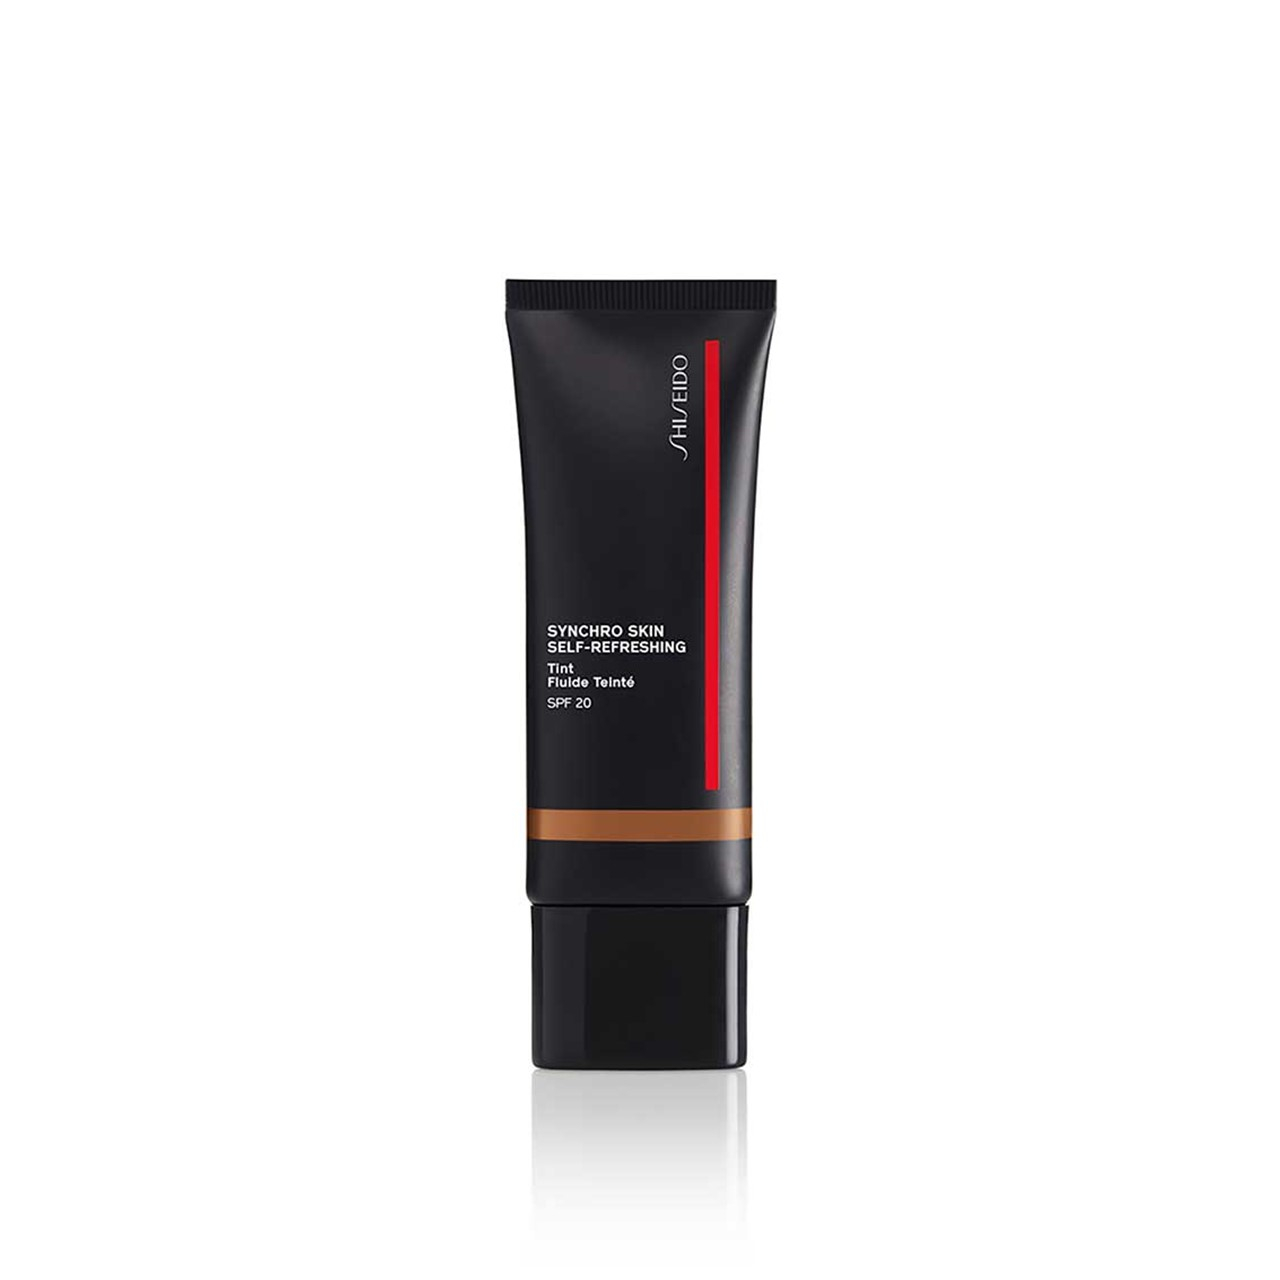 Shiseido Synchro Skin Self-Refreshing Tint SPF20 515 Deep Tsubaki 30ml